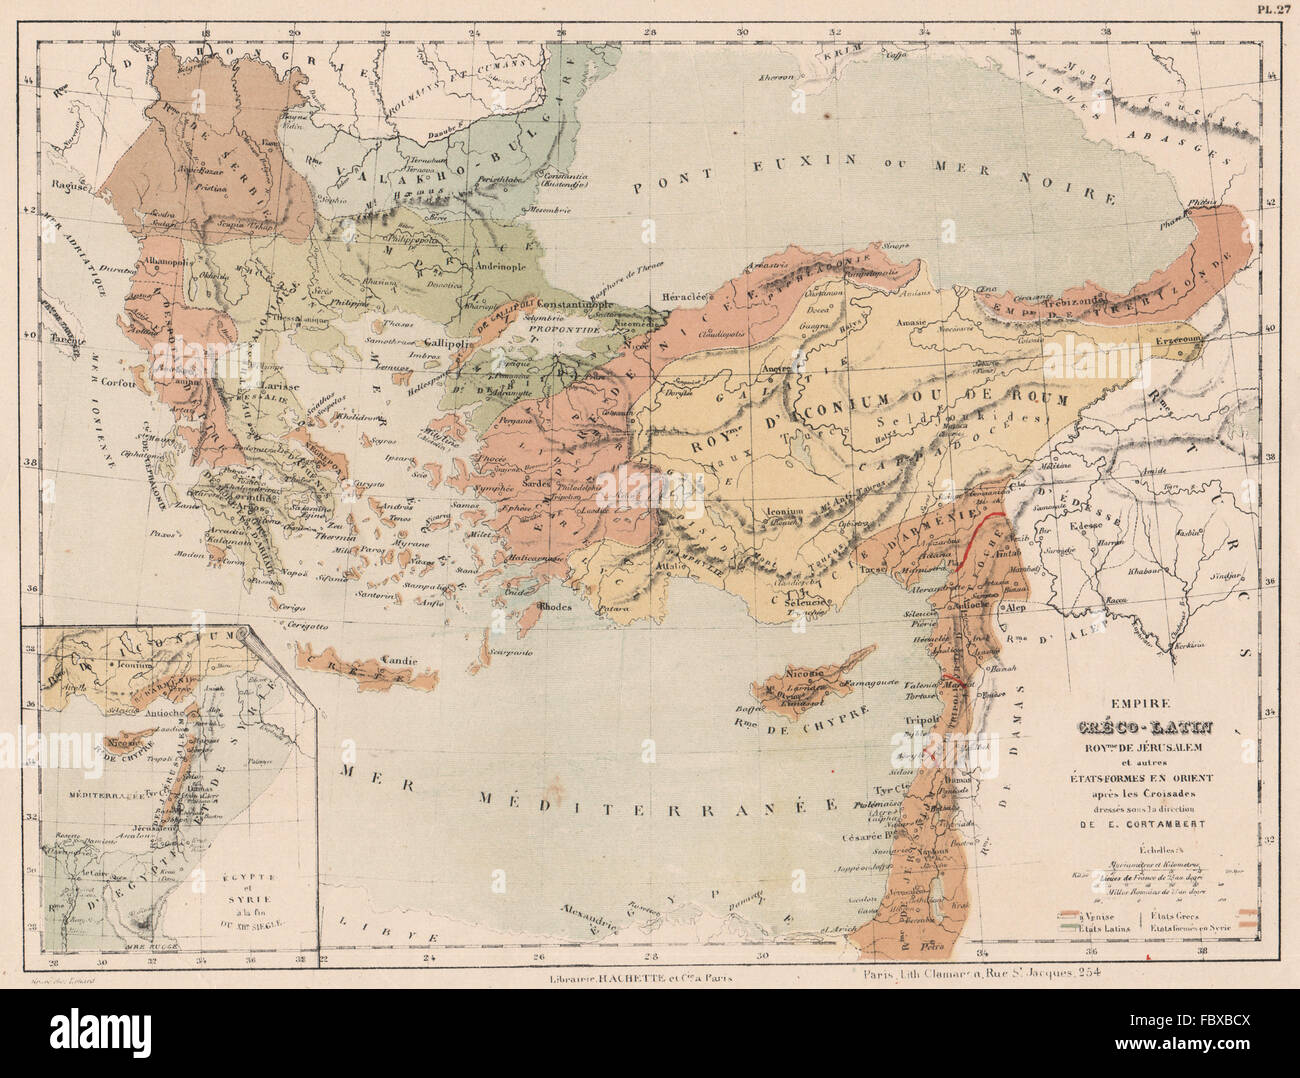 Imperio greco-latina de Rumania. Estado cruzado. Grecia Anatolia Levant, 1880 mapa Foto de stock